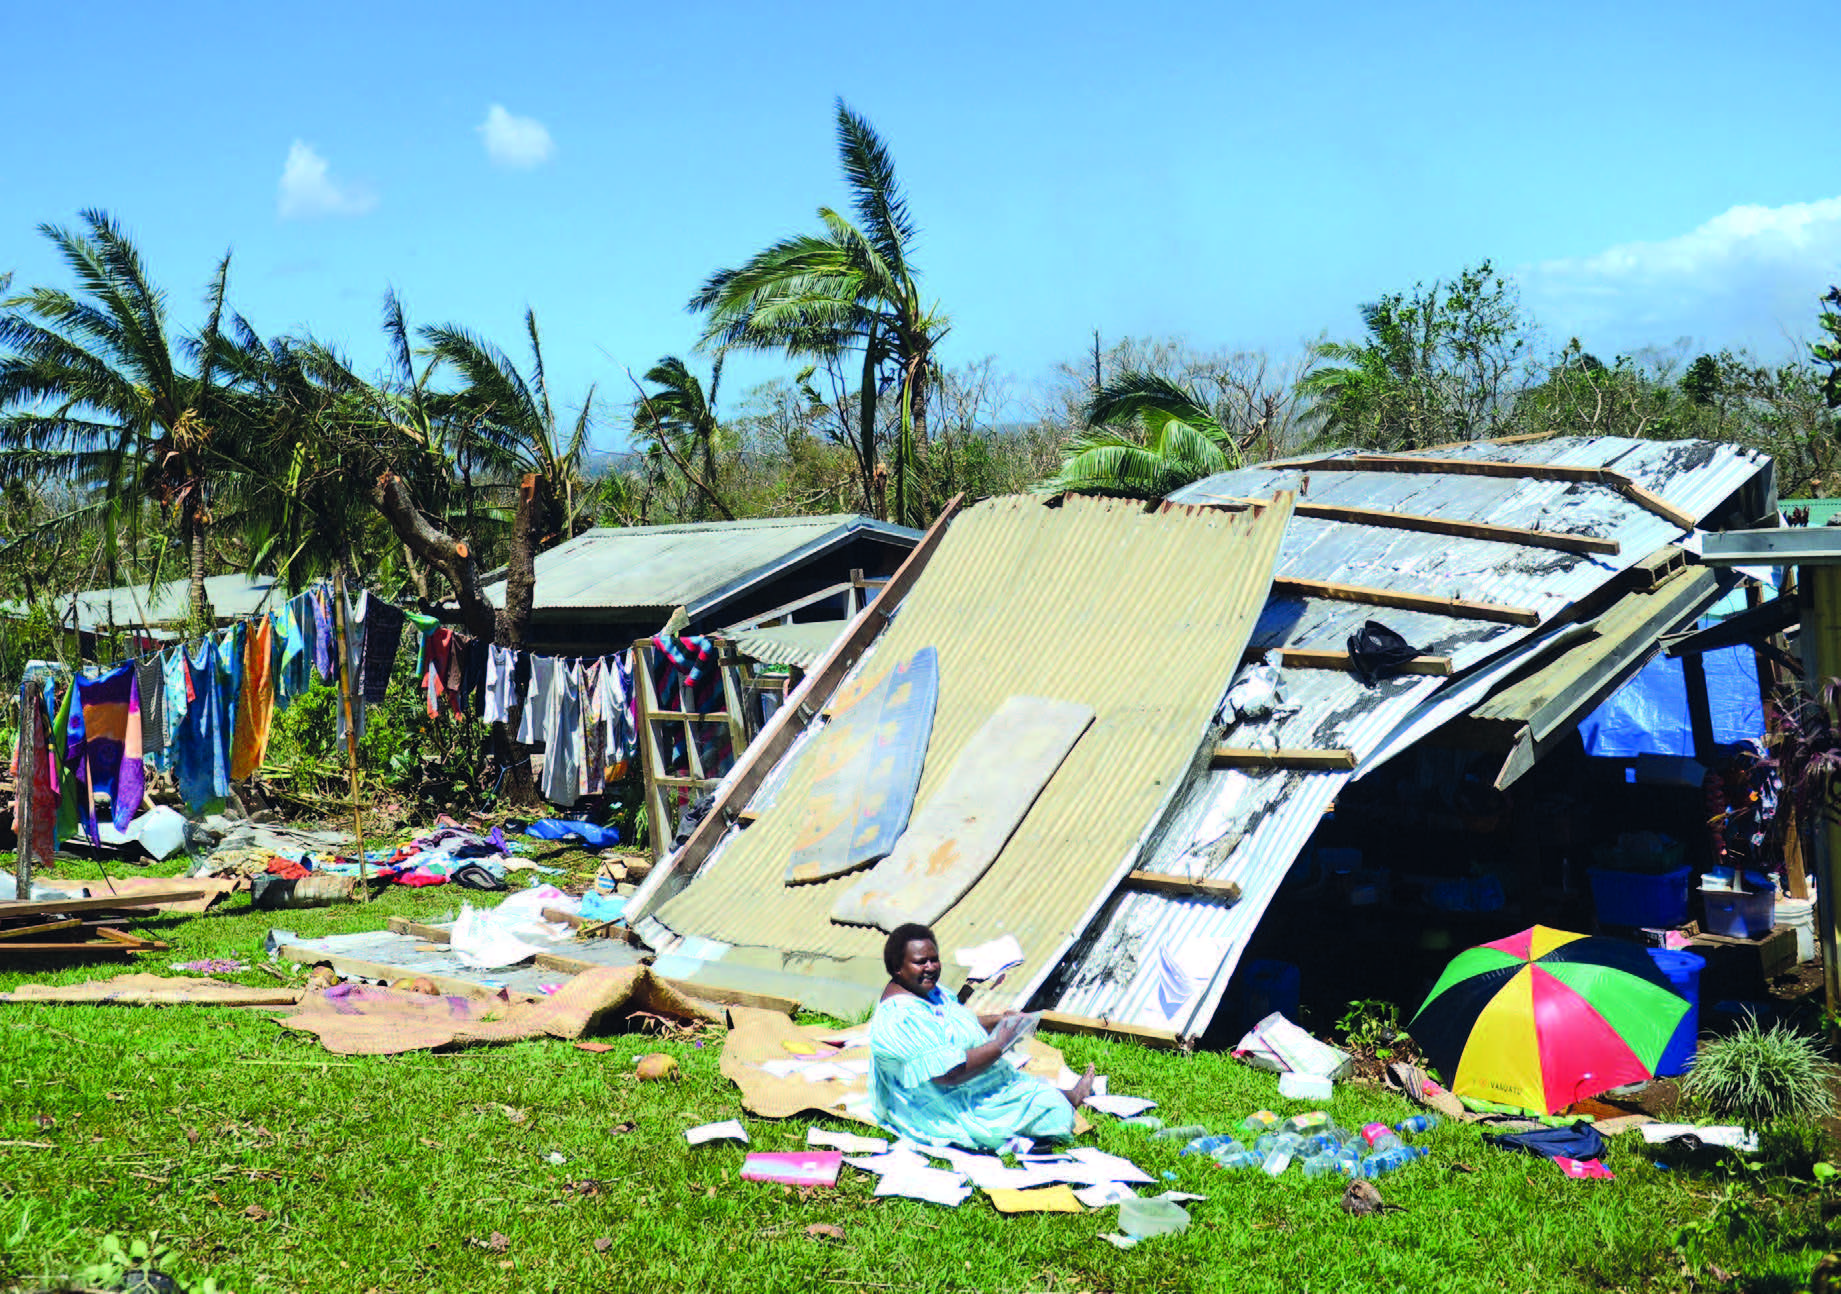 Category 5 Cyclone Harold strengthens in Pacific, lashing Vanuatu